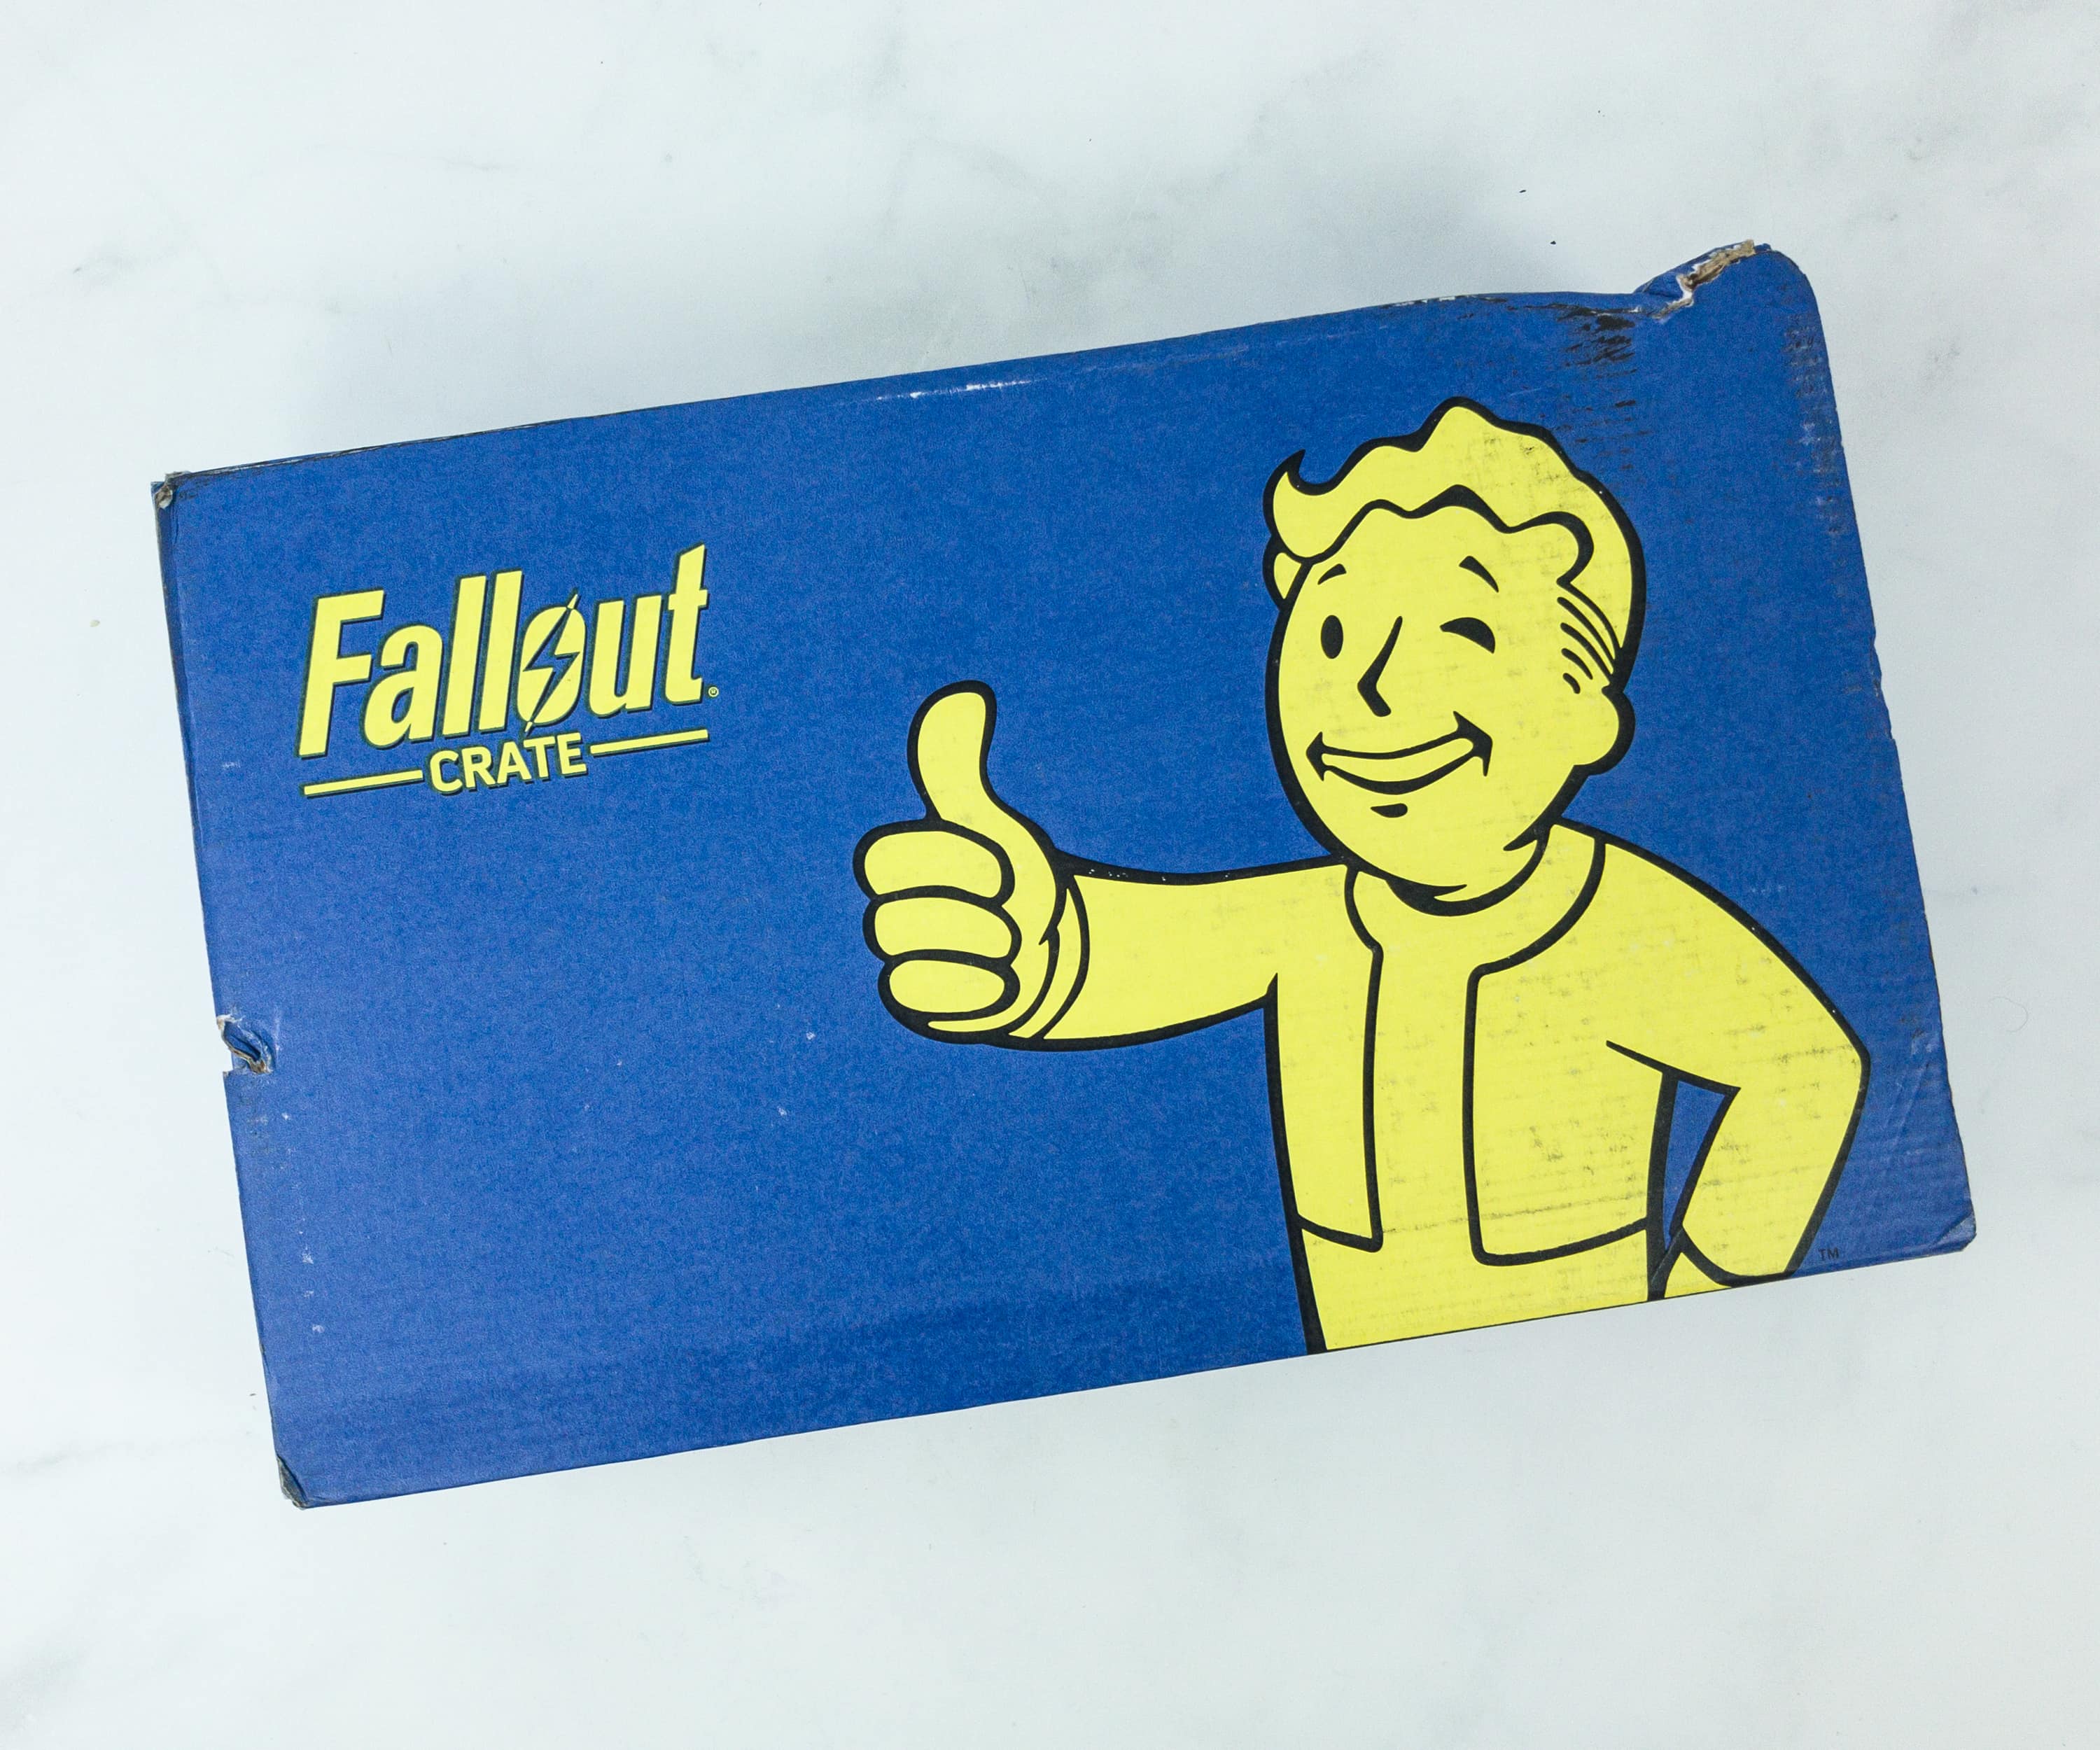 Fallout Subscription Box